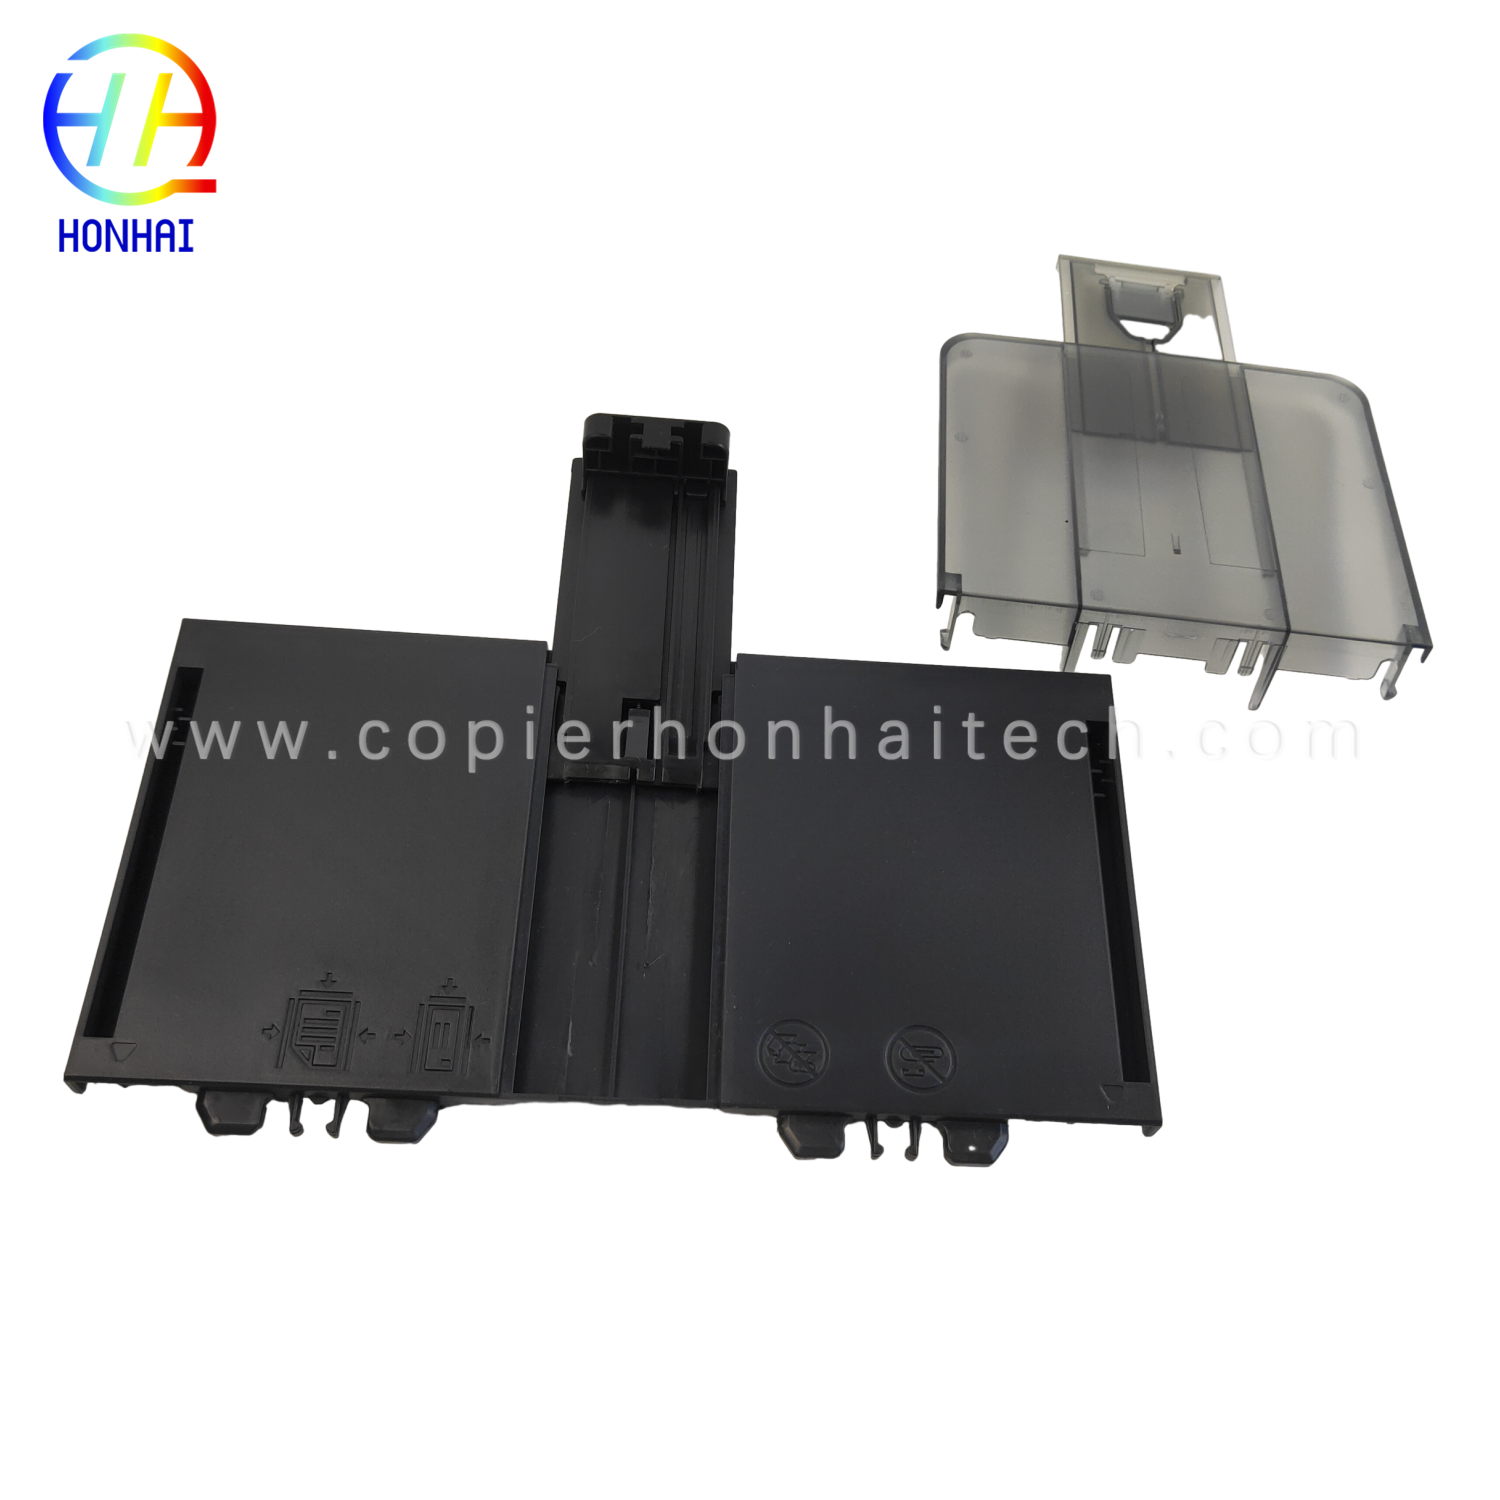 https://www.copierhonhaitech.com/reception-tray-and-paper-tray-set-for-hp-laserjet-pro-mfp-225dn-product/